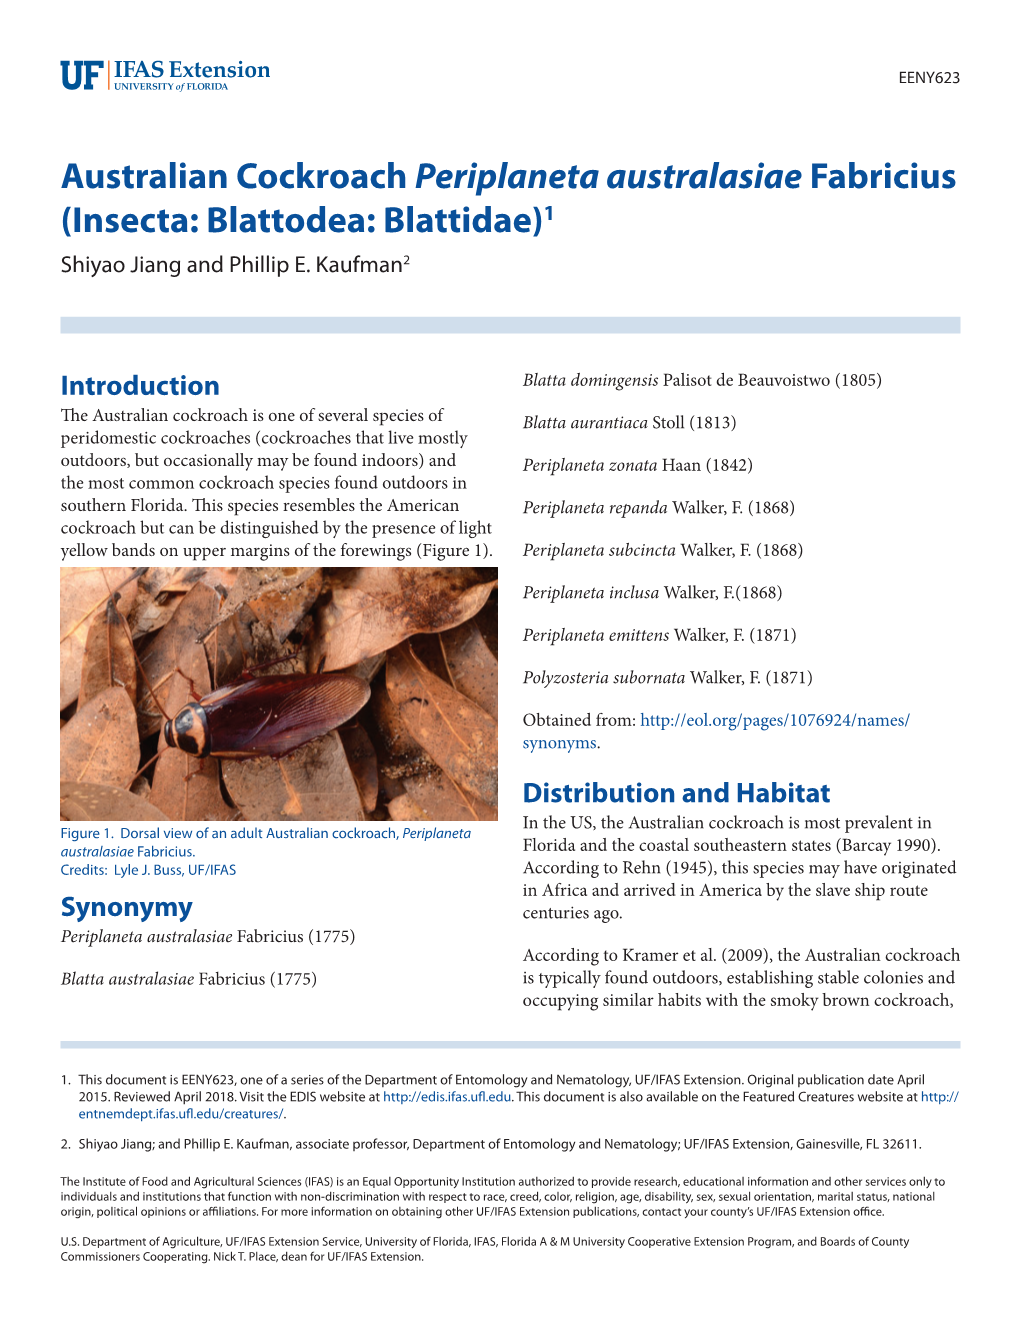 Australian Cockroach Periplaneta Australasiae Fabricius (Insecta: Blattodea: Blattidae)1 Shiyao Jiang and Phillip E